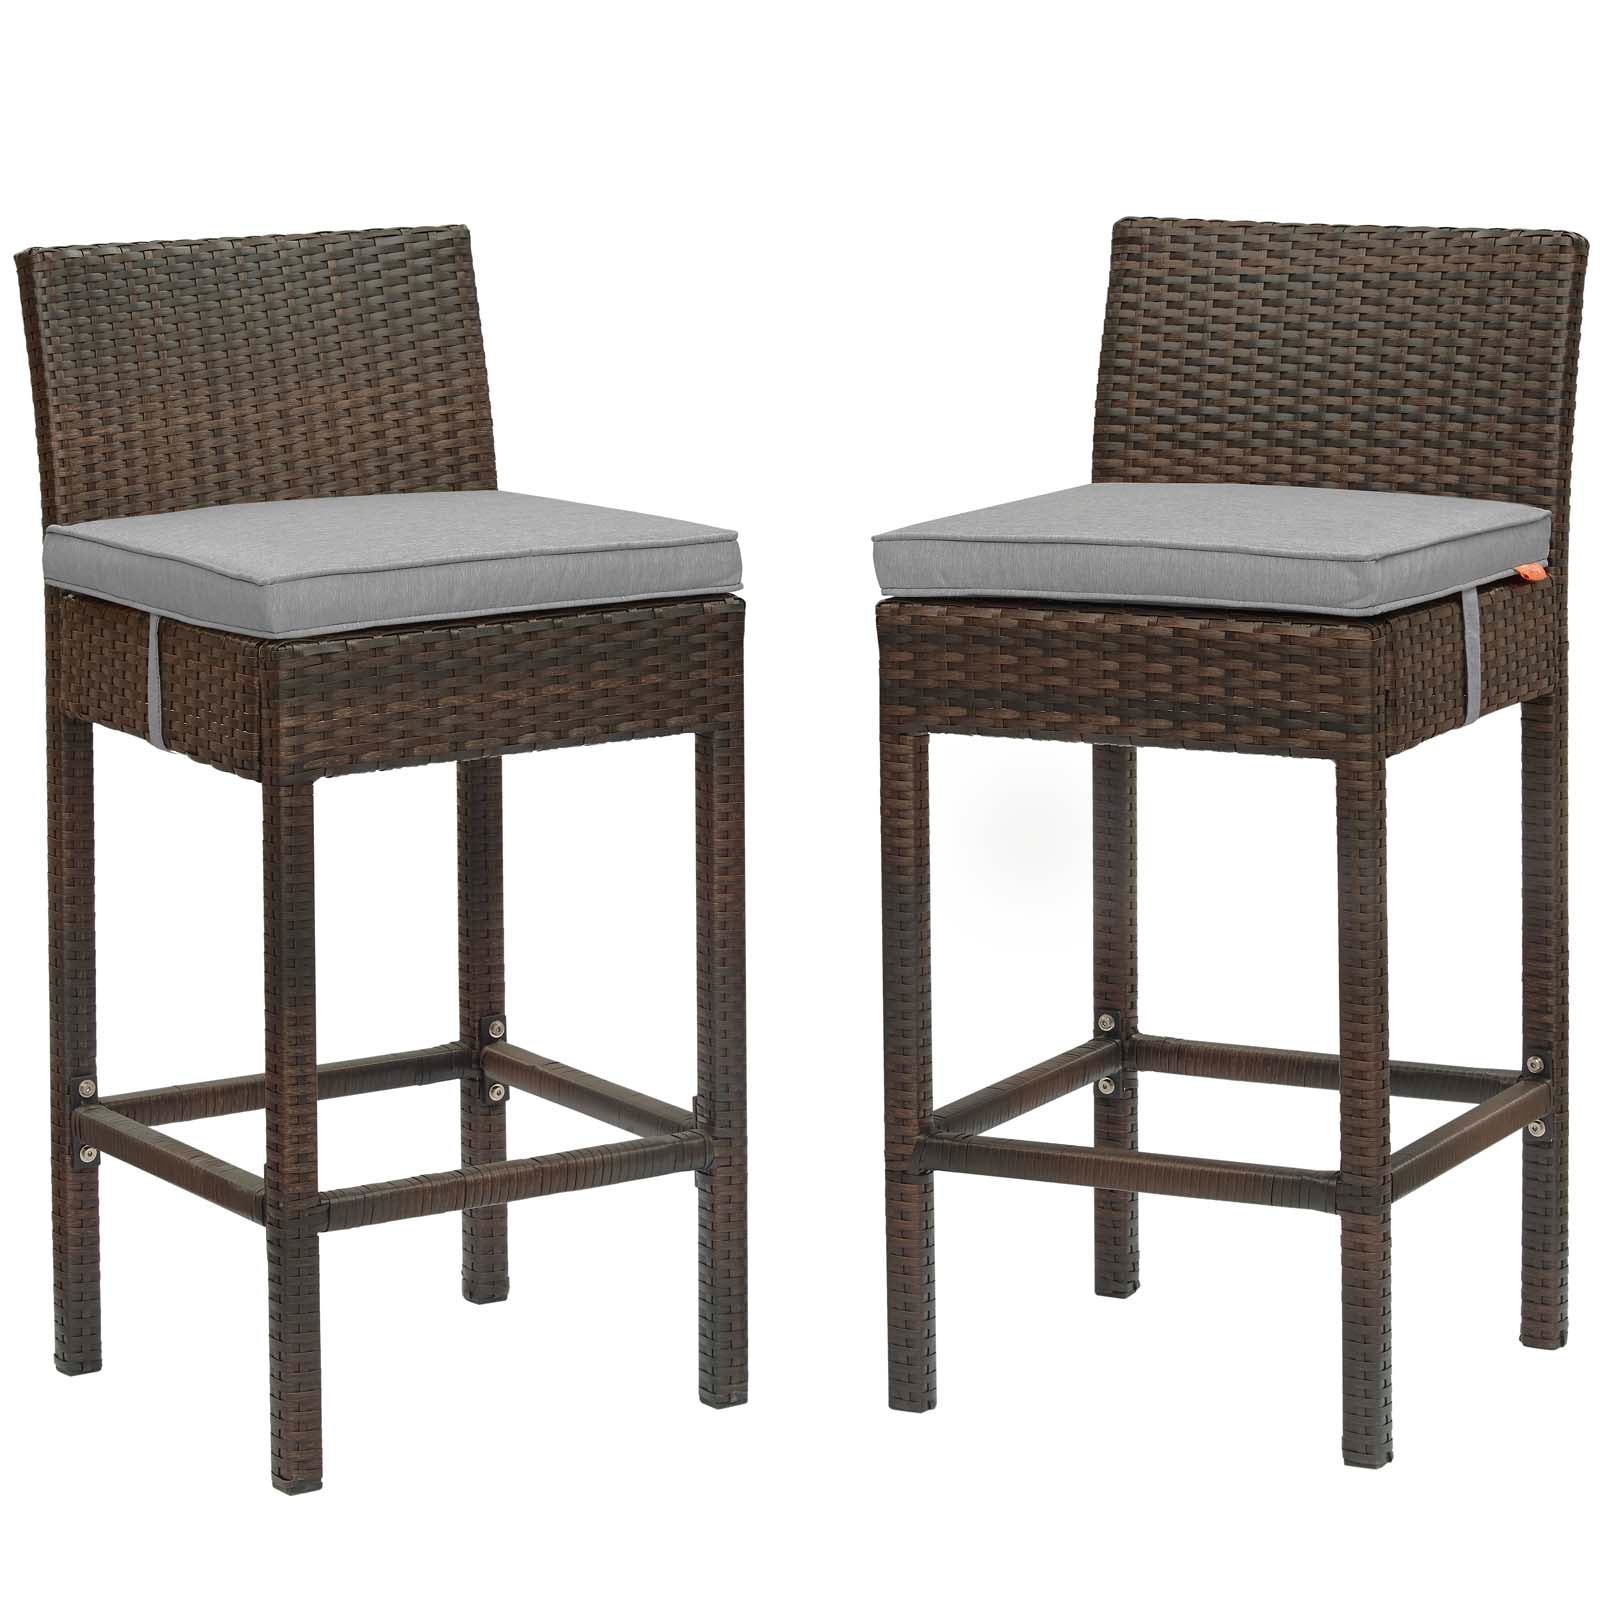 Modway Outdoor Barstools - Conduit Bar Stool Outdoor Patio Wicker Rattan Set of 2 Brown Gray